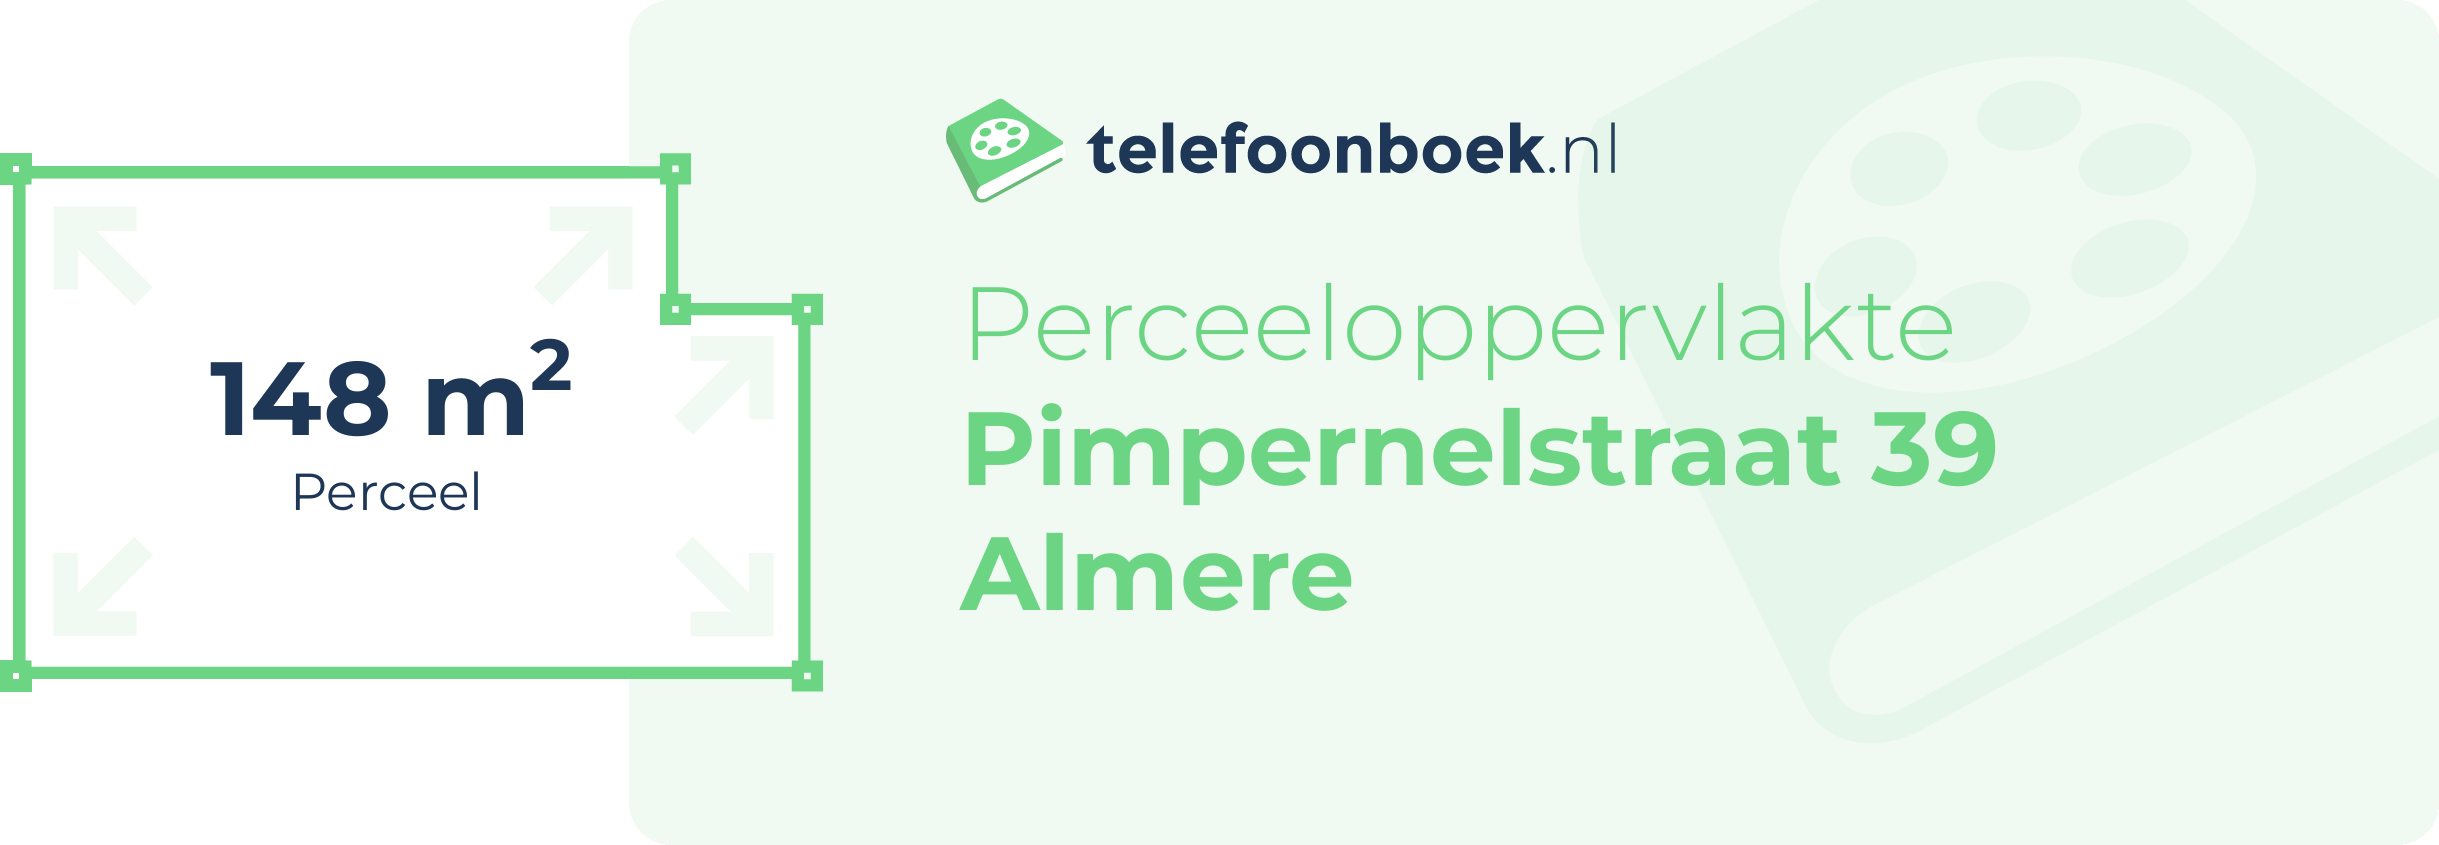 Perceeloppervlakte Pimpernelstraat 39 Almere